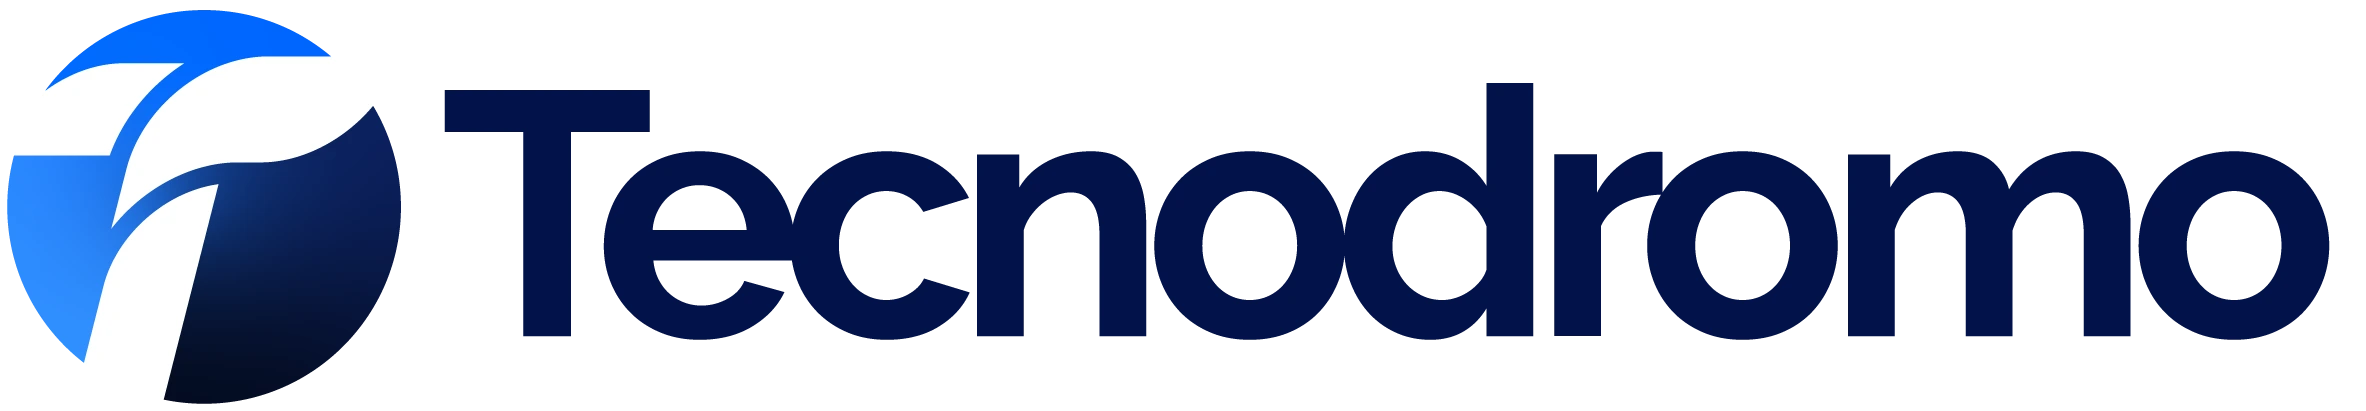 Logo-Tecnodromo